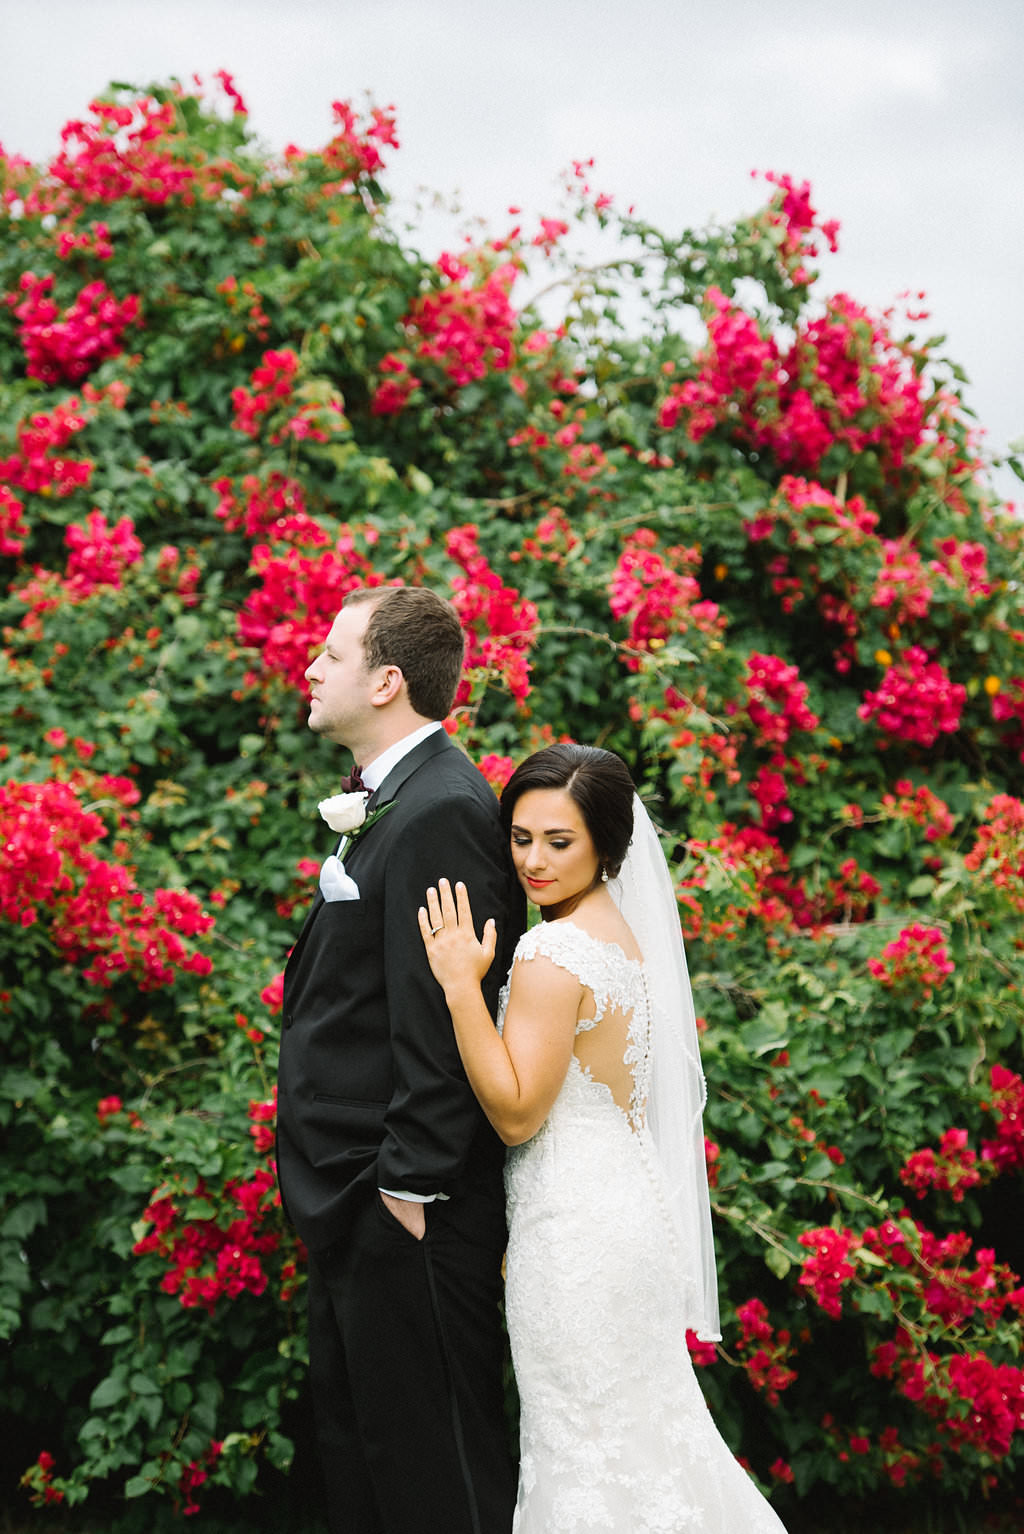 Outdoor Garden First Look Wedding Portrait | Tampa Bay Wedding Photographer Kera Photography